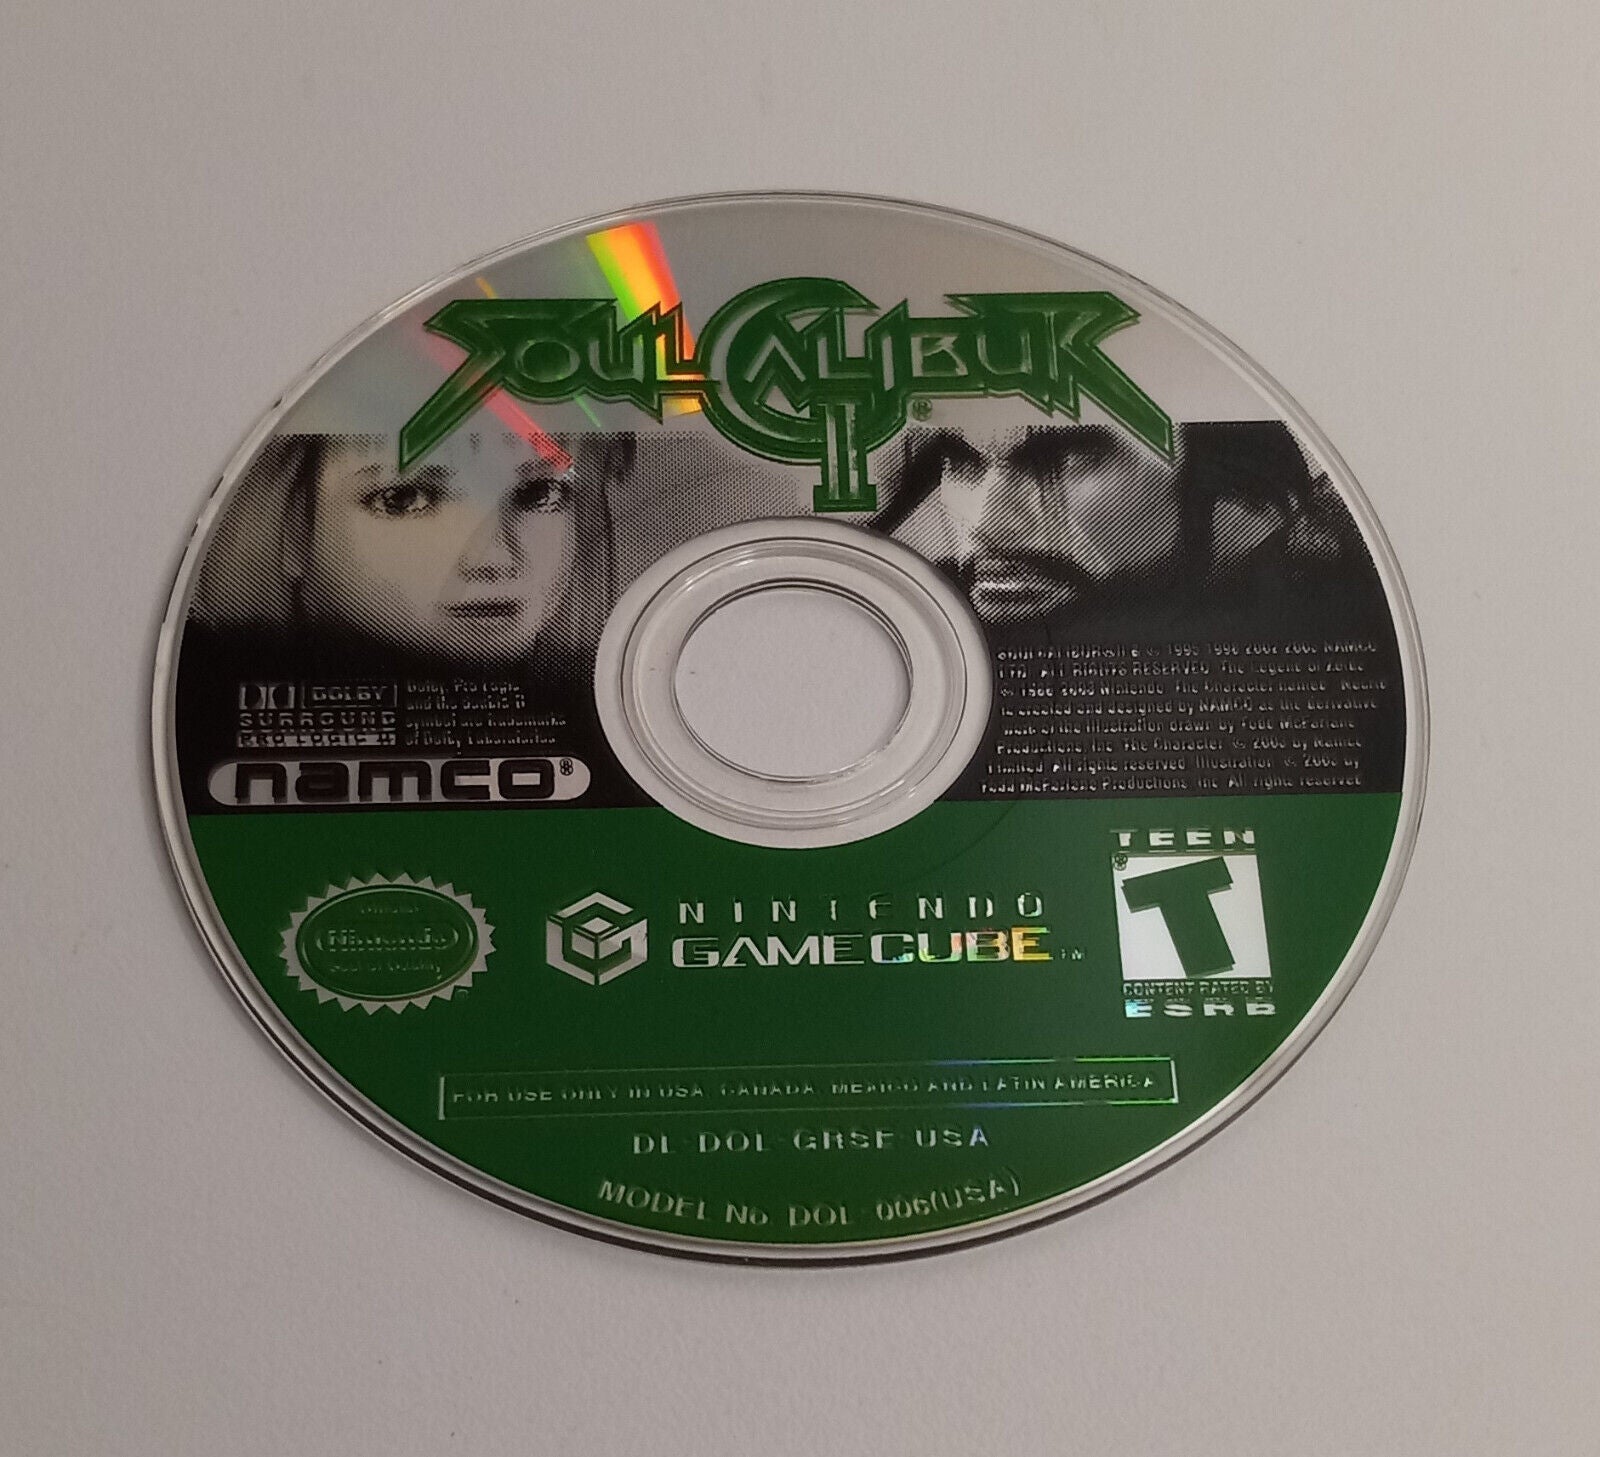 Game Cube - Soul Calibur II - Used